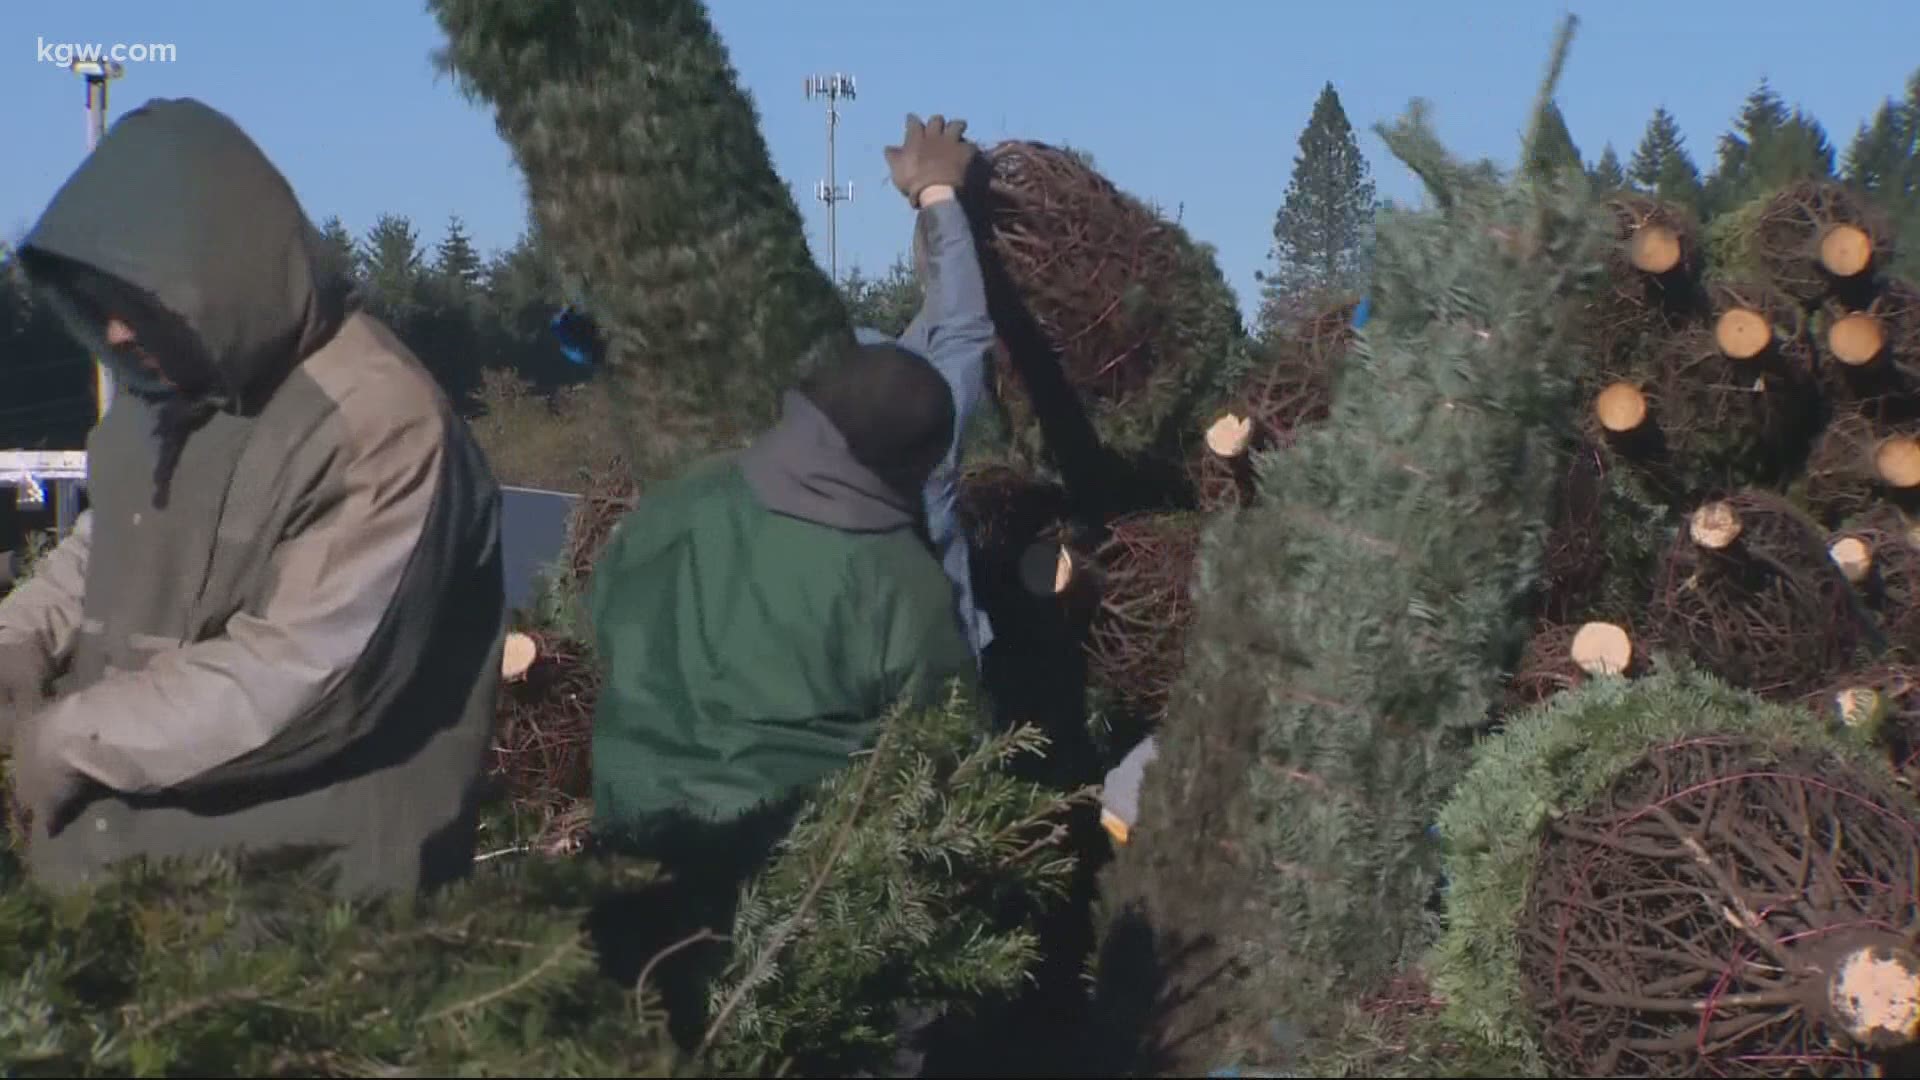 It’s a good year for Christmas tree farmers. Joe Raineri explains why.